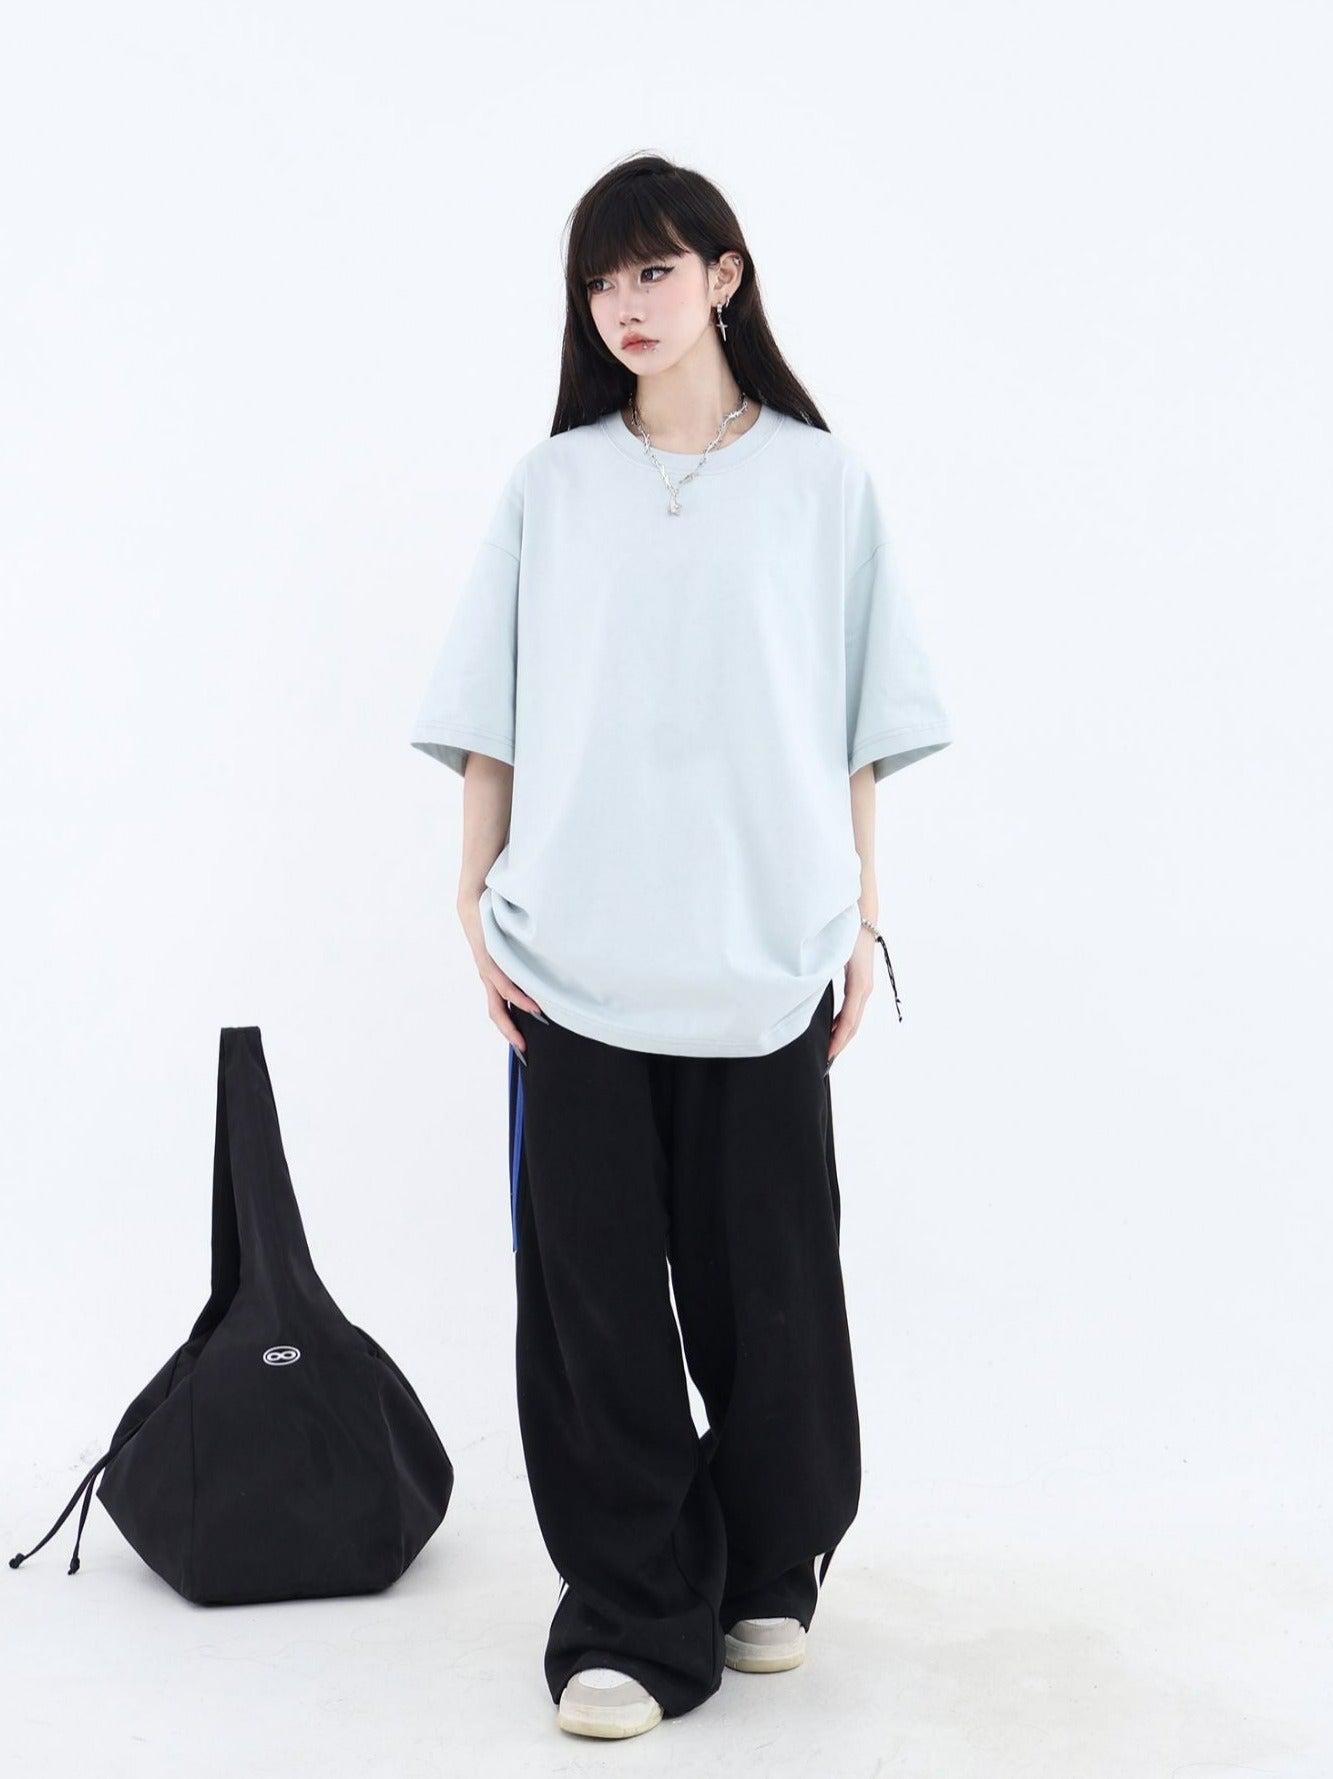 Solid Plain T-Shirt Korean Street Fashion T-Shirt By Jump Next Shop Online at OH Vault